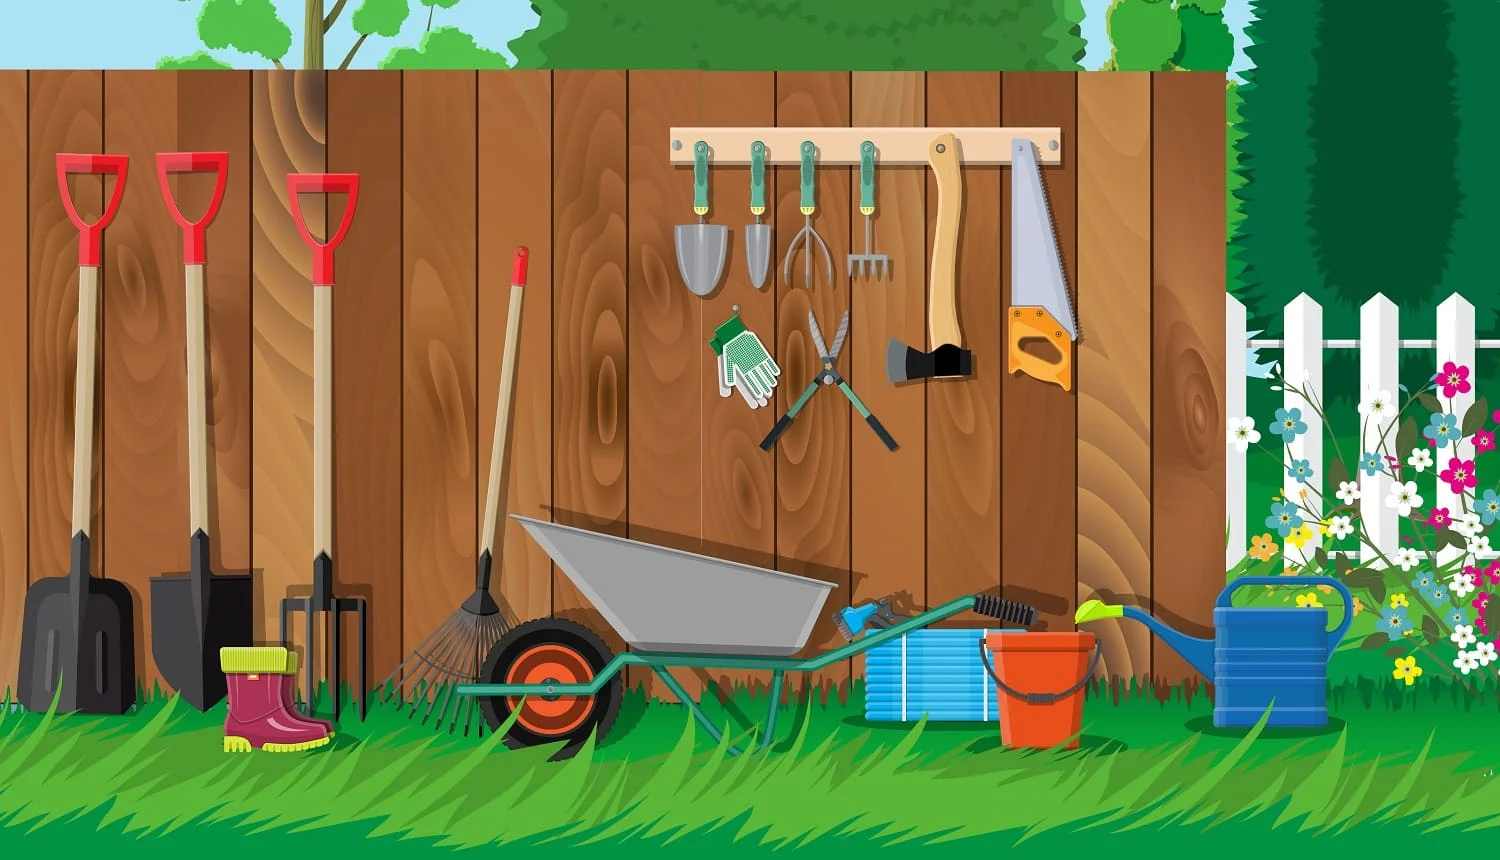 Gardening tools set. Equipment for garden. Saw bucket ax wheelbarrow hose rake can shovel secateurs gloves boots. Wooden fence, flower, grass, tree, sky, cloud. Vector illustration in flat style